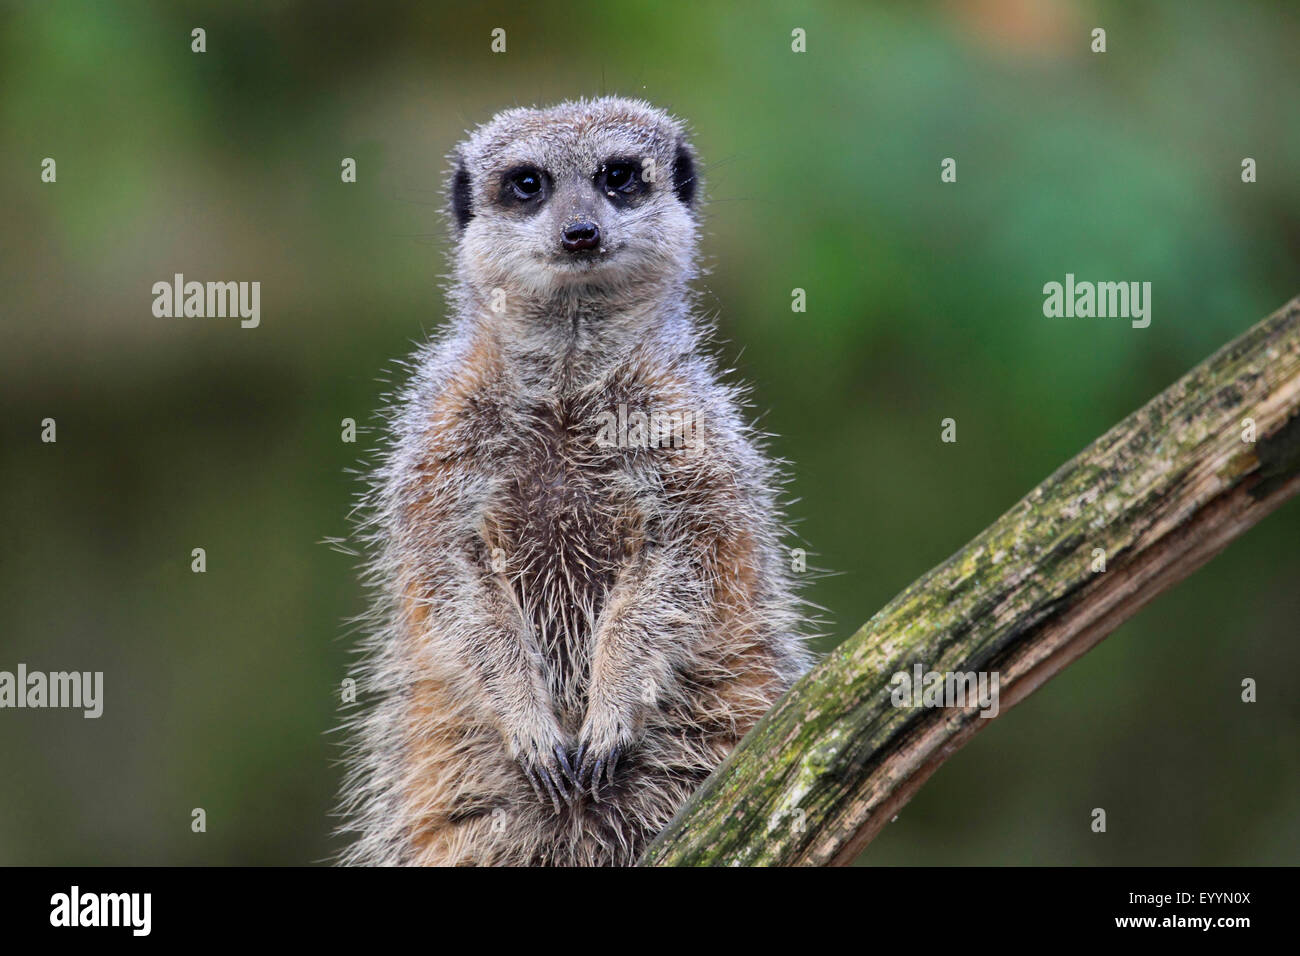 Suricate, sottile-tailed meerkat (Suricata suricatta), si siede su un ramo in posizione verticale Foto Stock